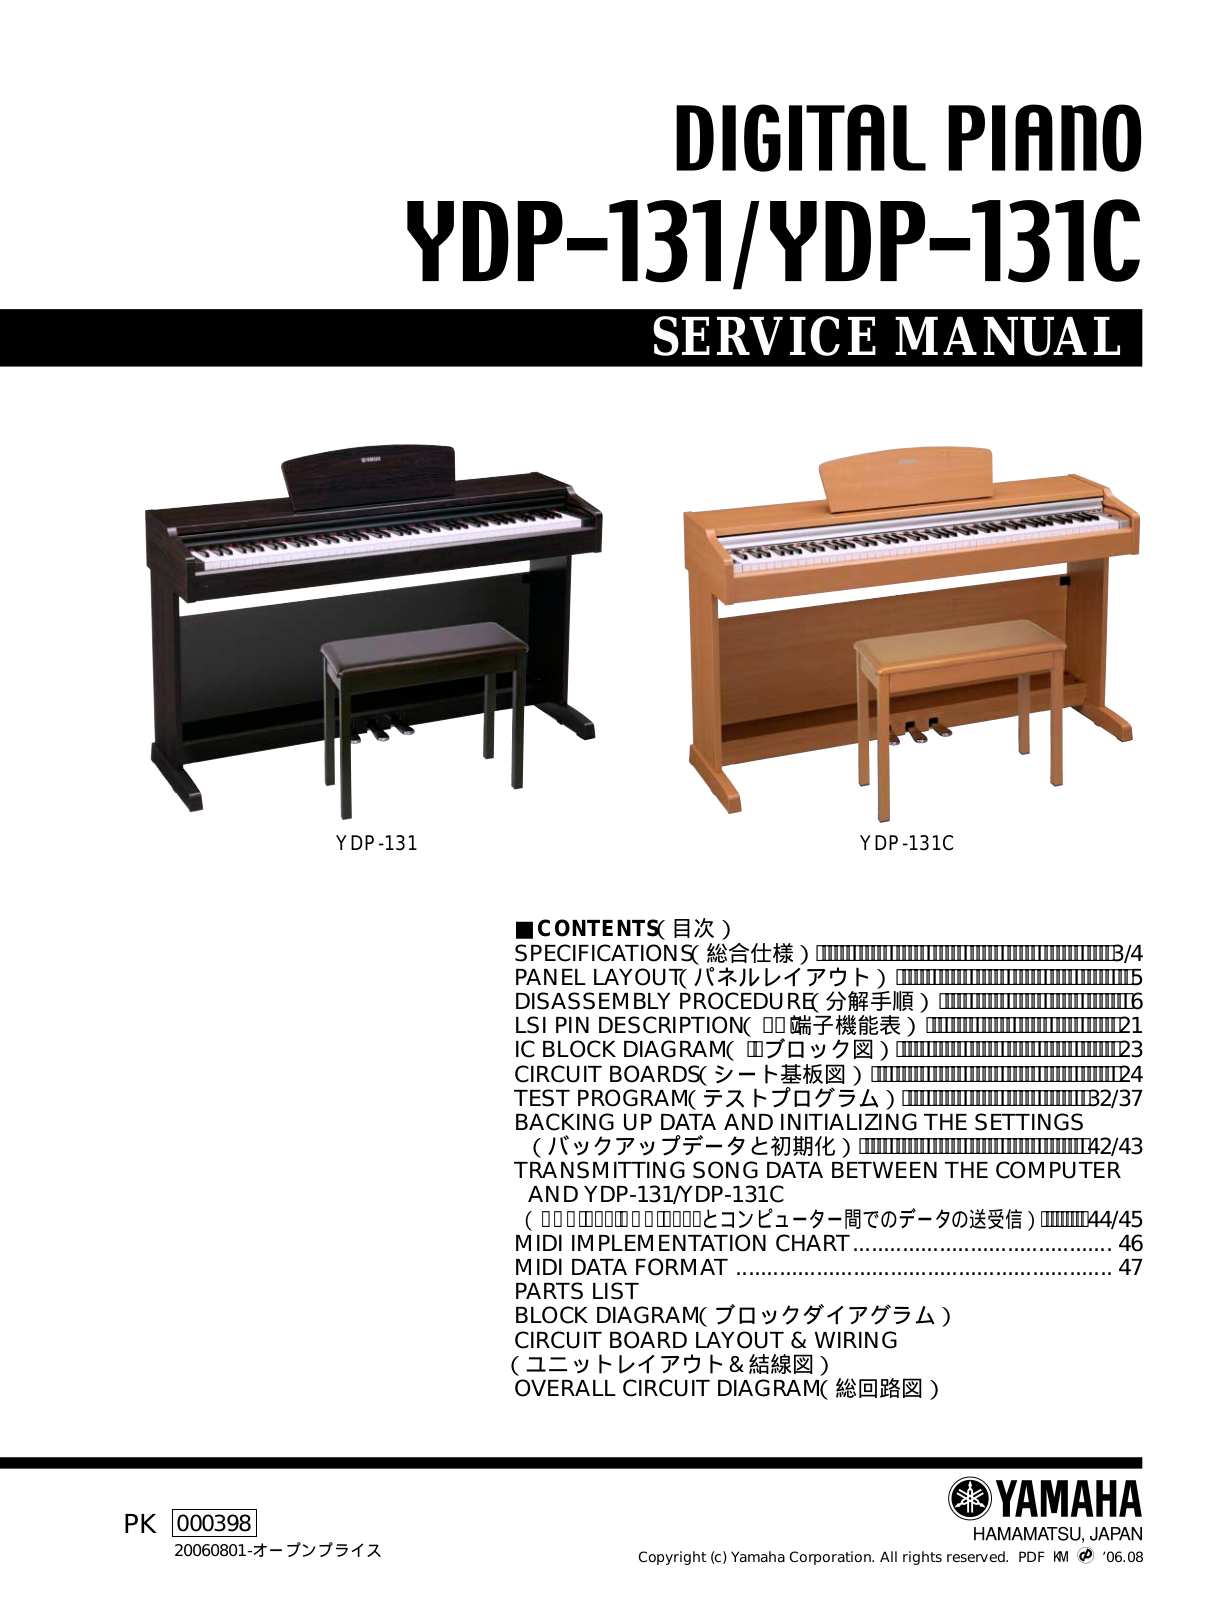 Yamaha ydp-131, ydp-131c Service Manual